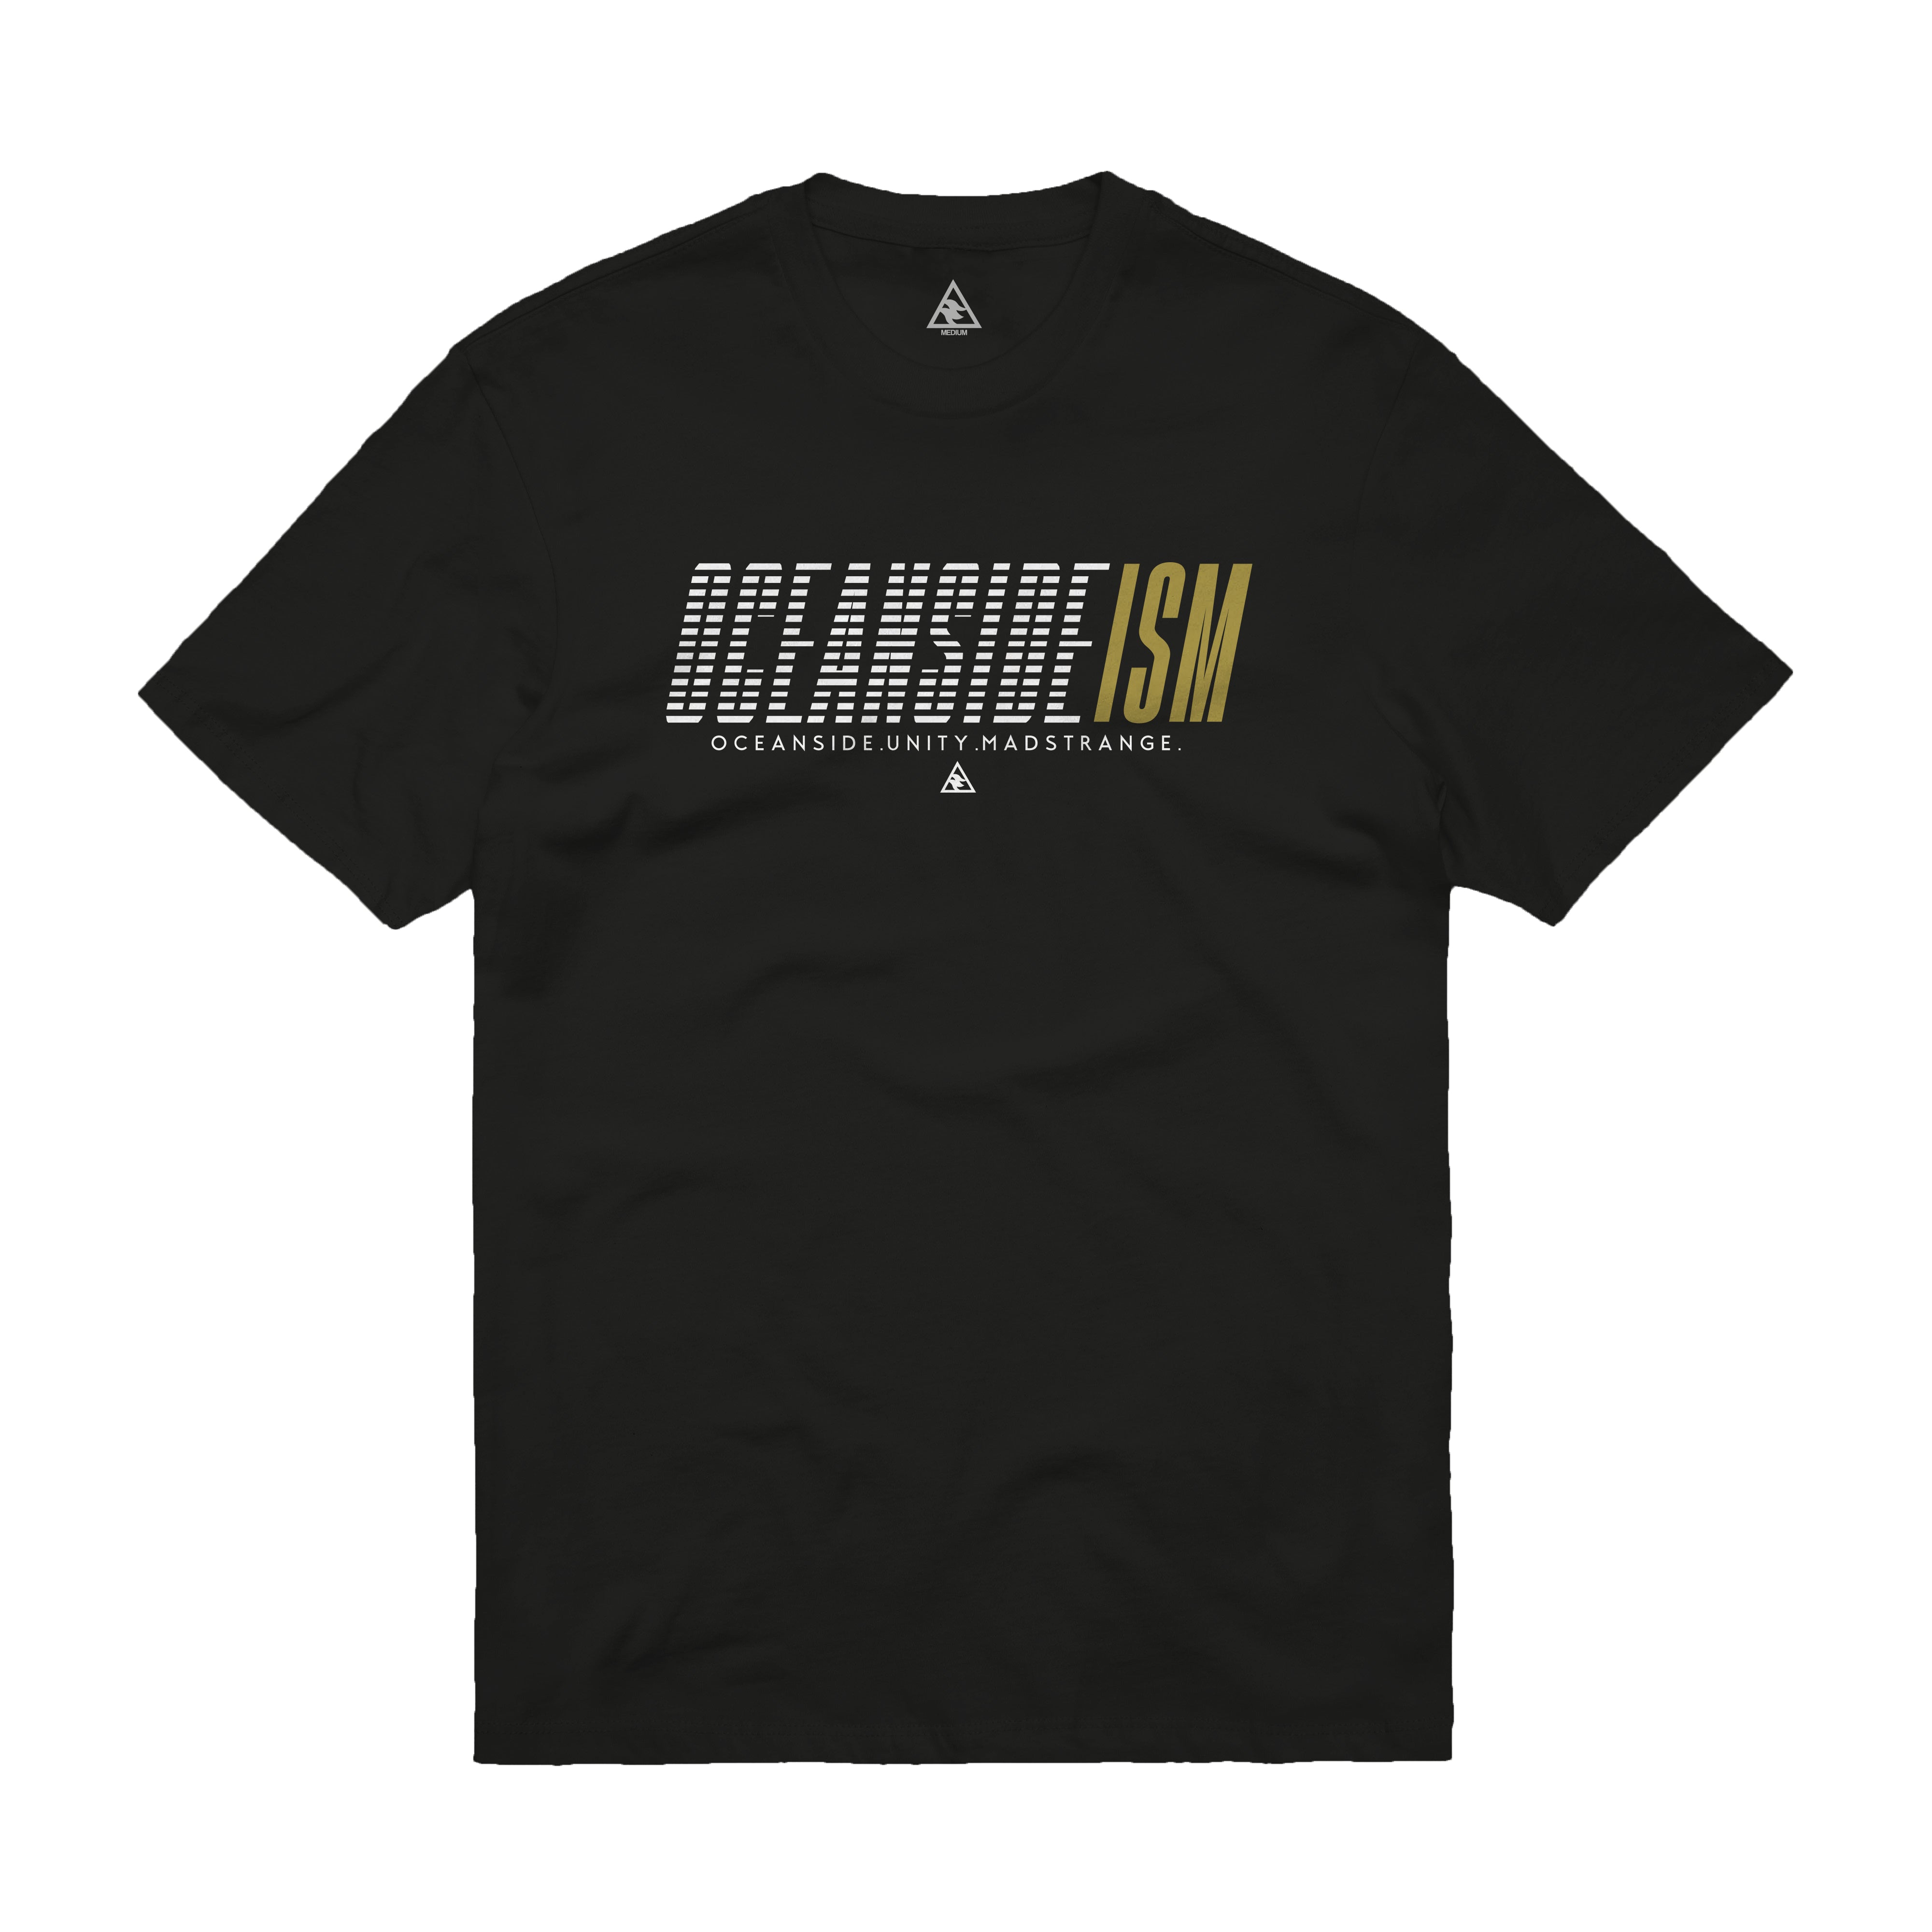 Oceansideism T-Shirt (Black)